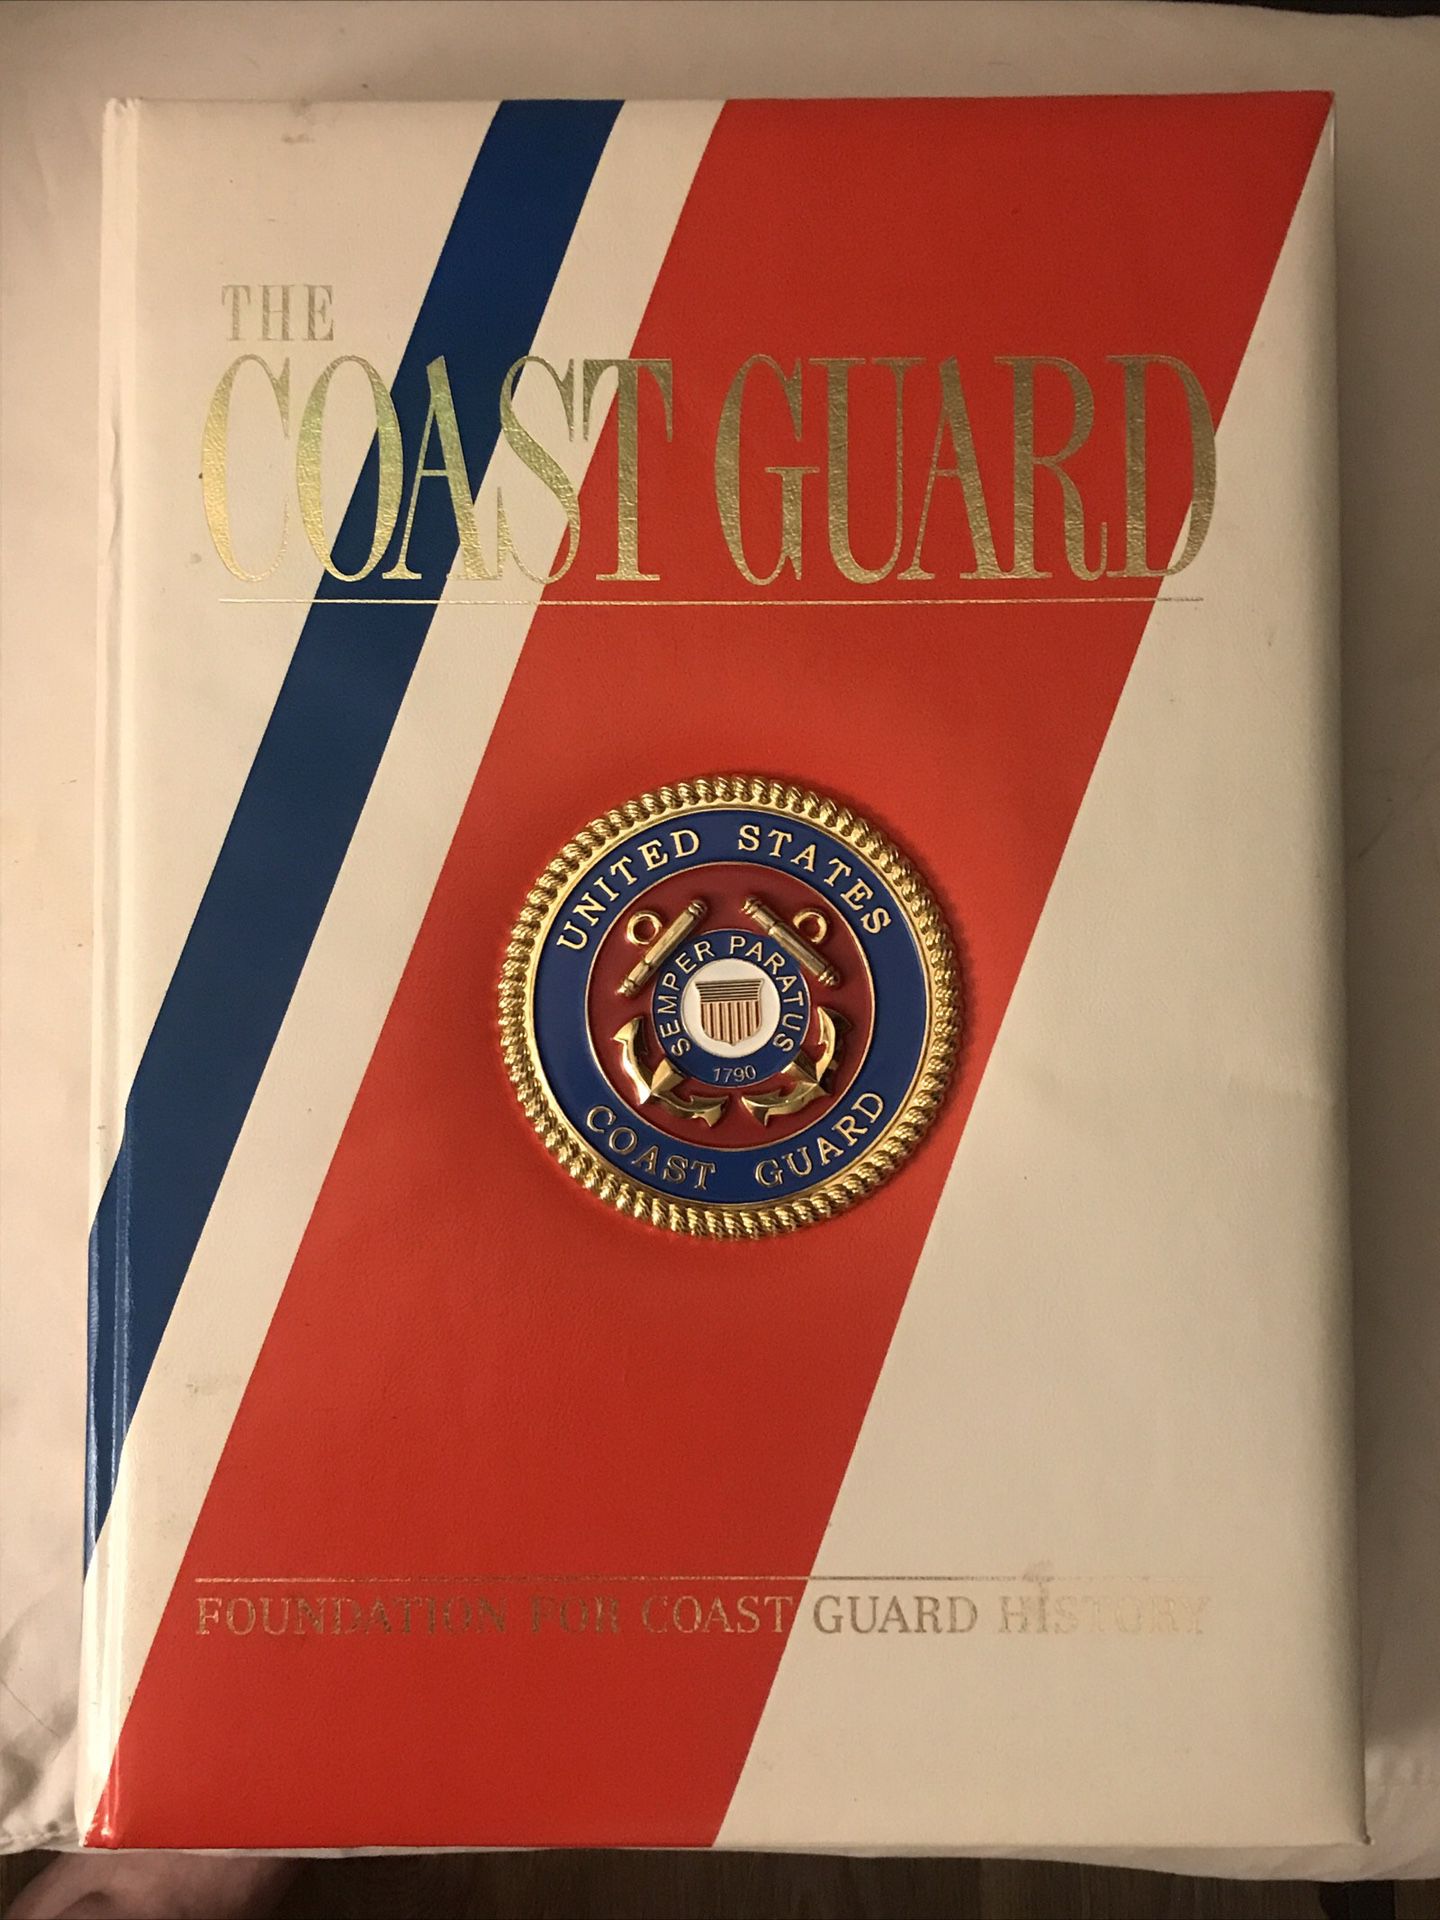 The Coast Guard  by Tom Beard 2004 Foundation For Coast Guard History Beaux Arts As